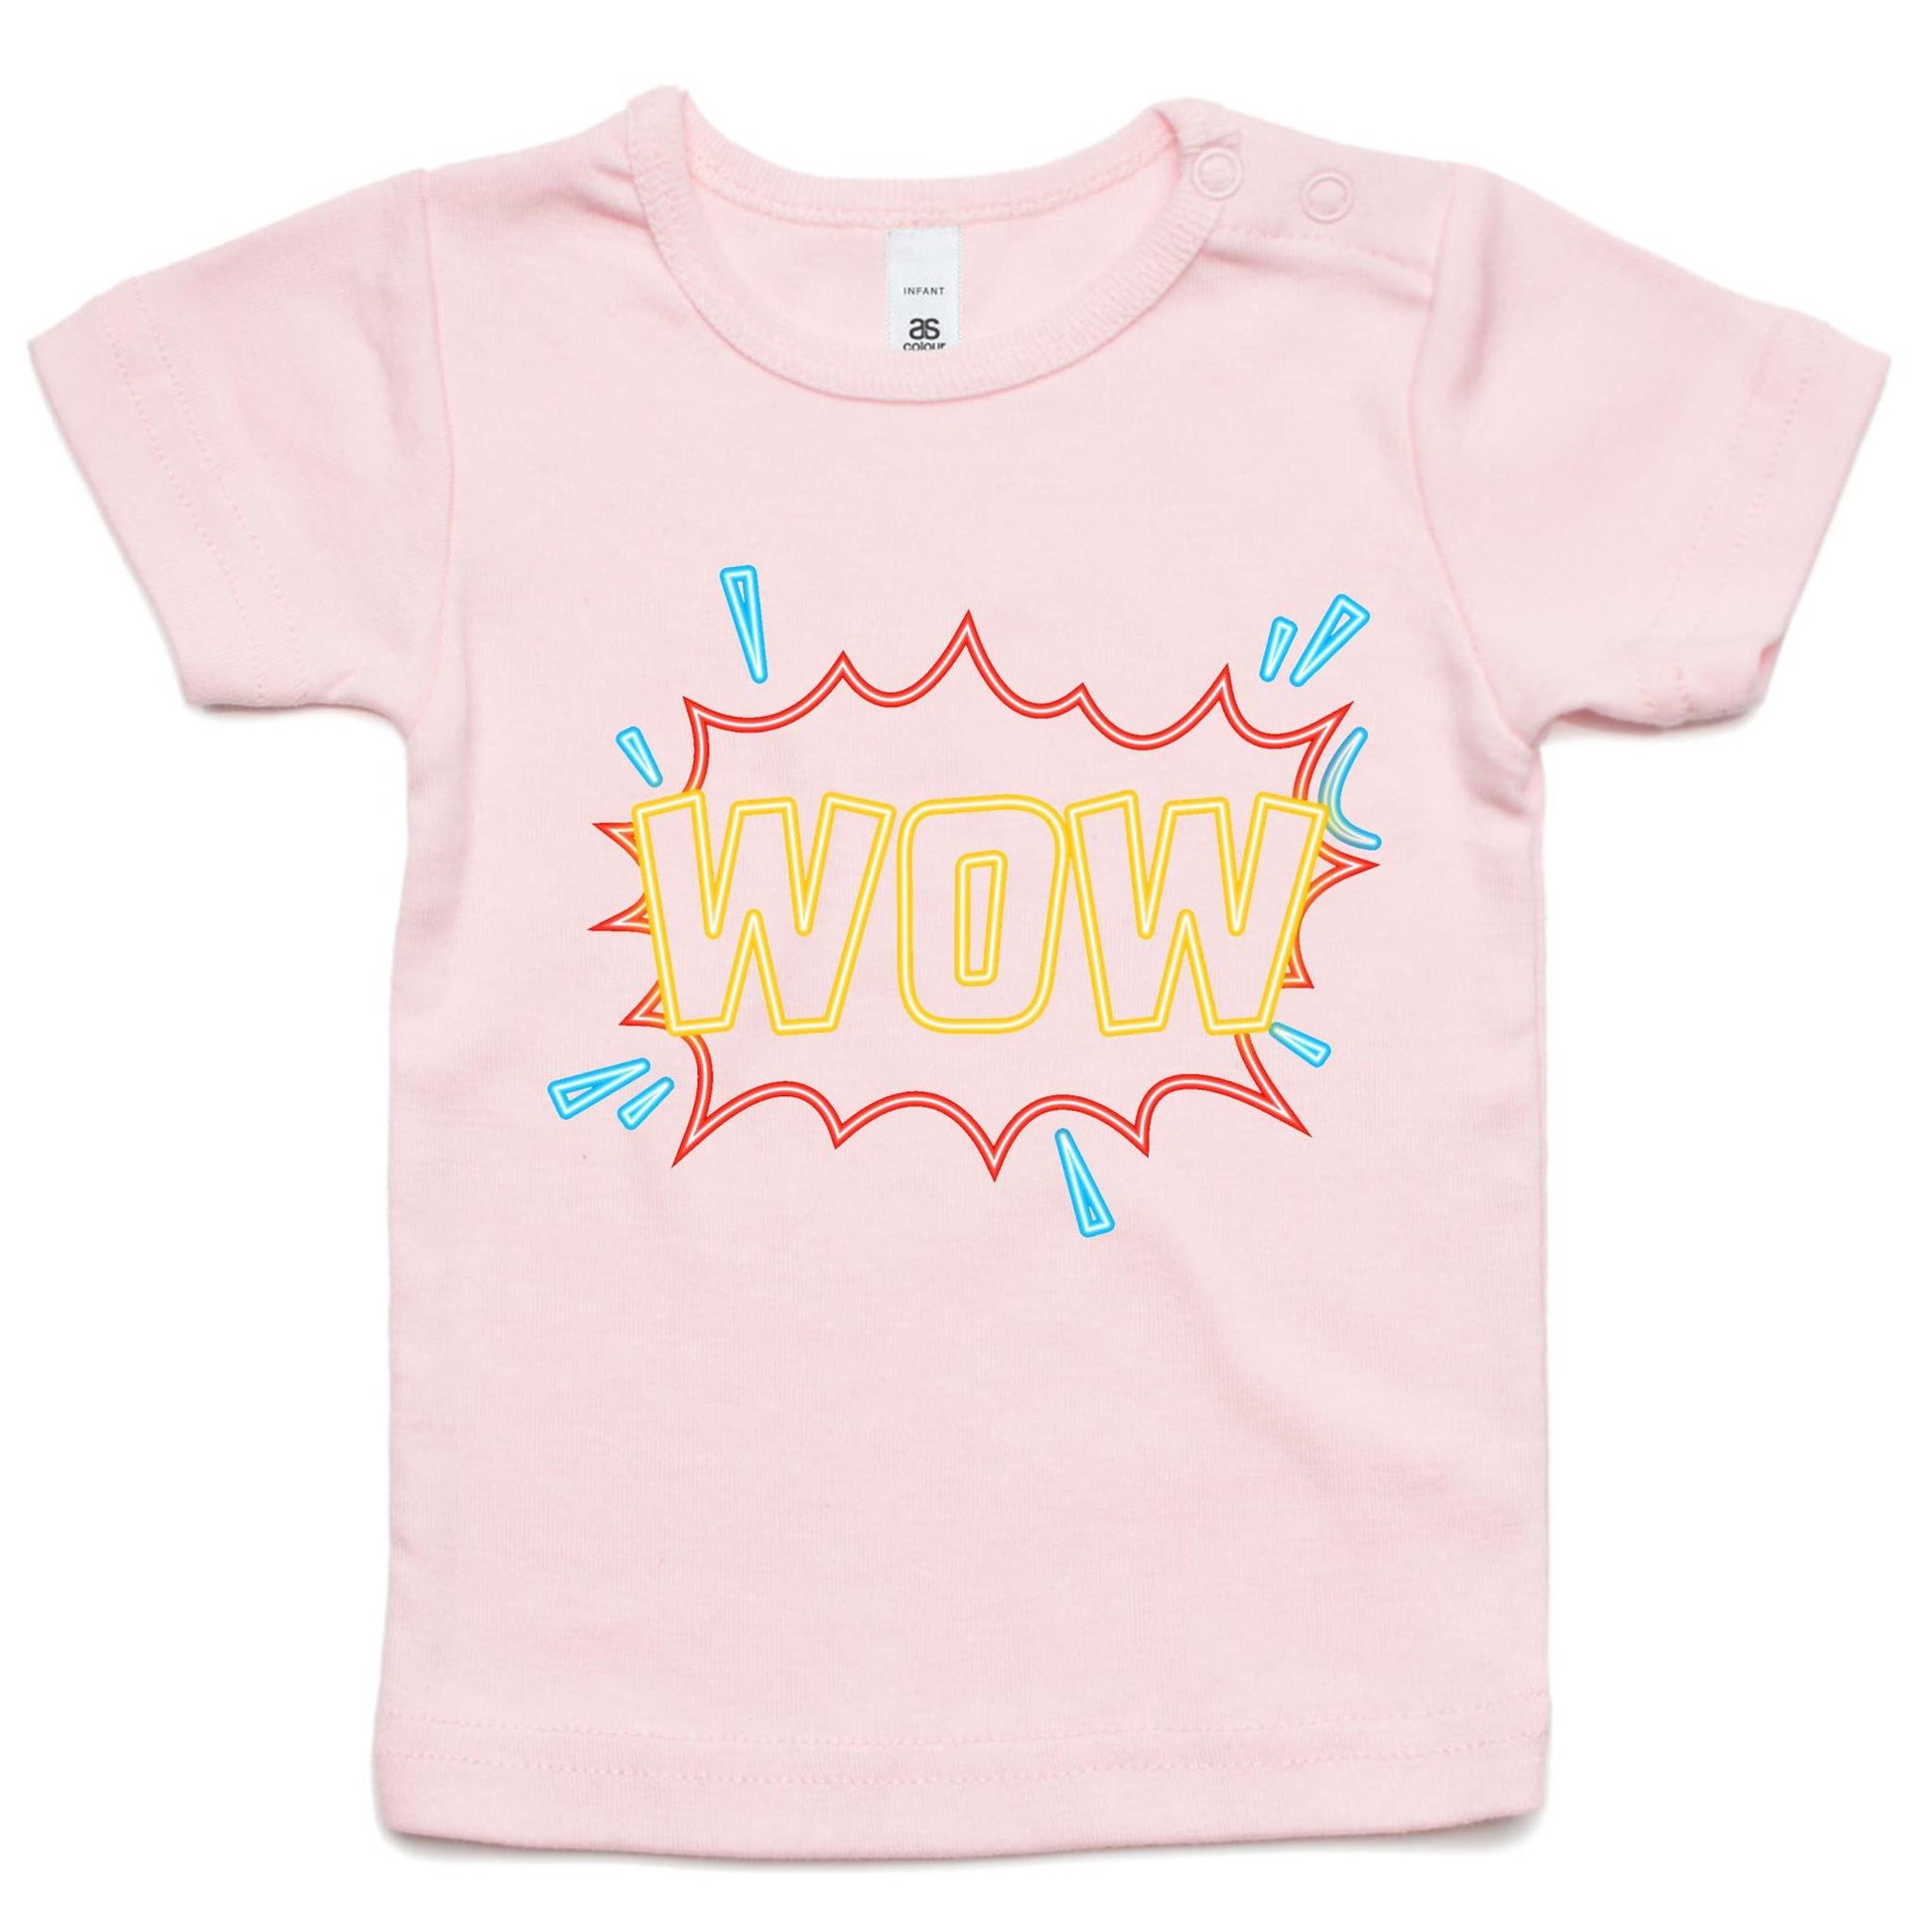 Wow, Comic Book - Baby T-shirt Pink Baby T-shirt comic